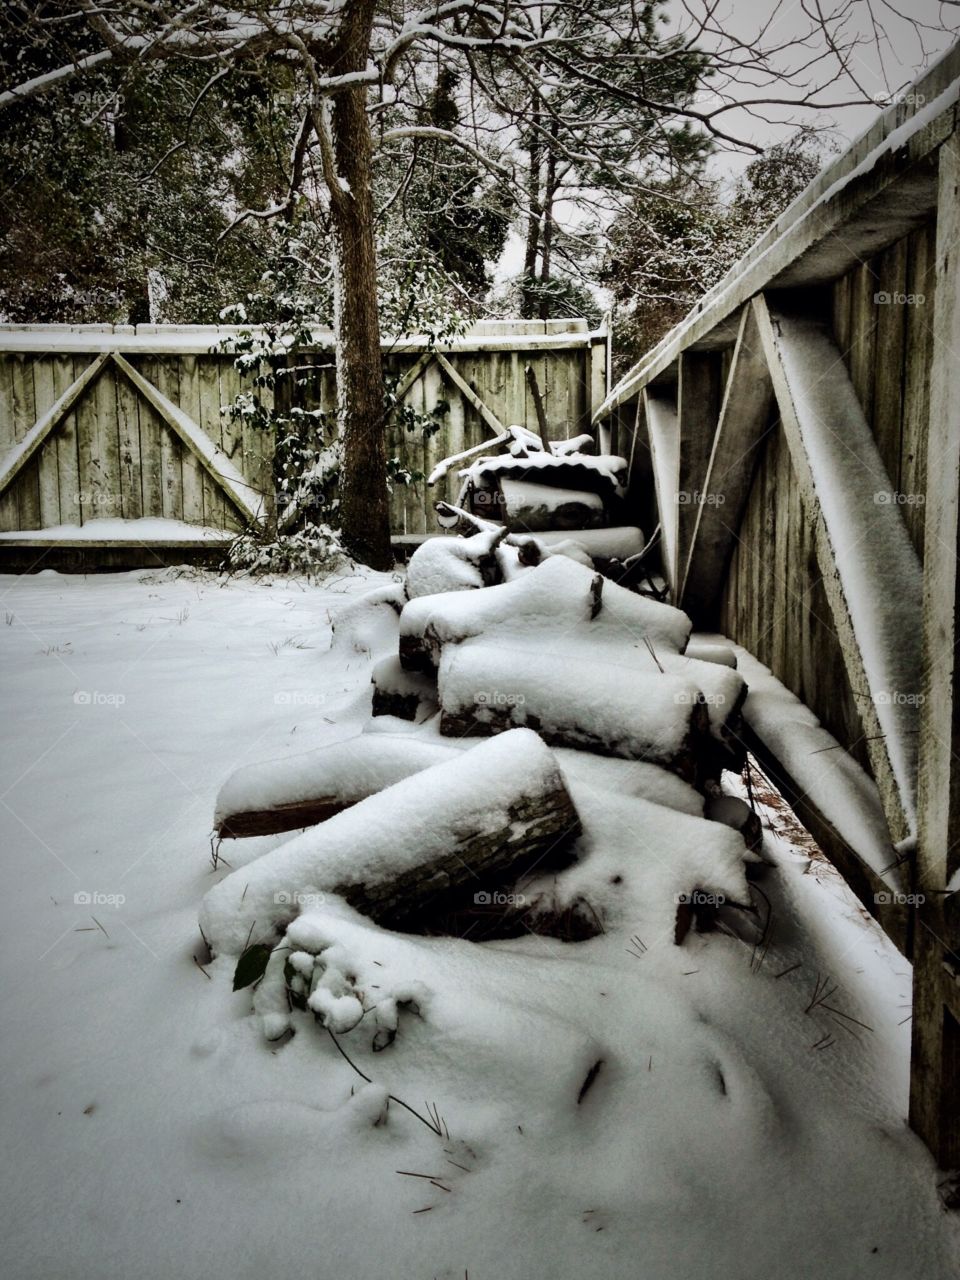 Snowy logs. Snowy logs by fence.